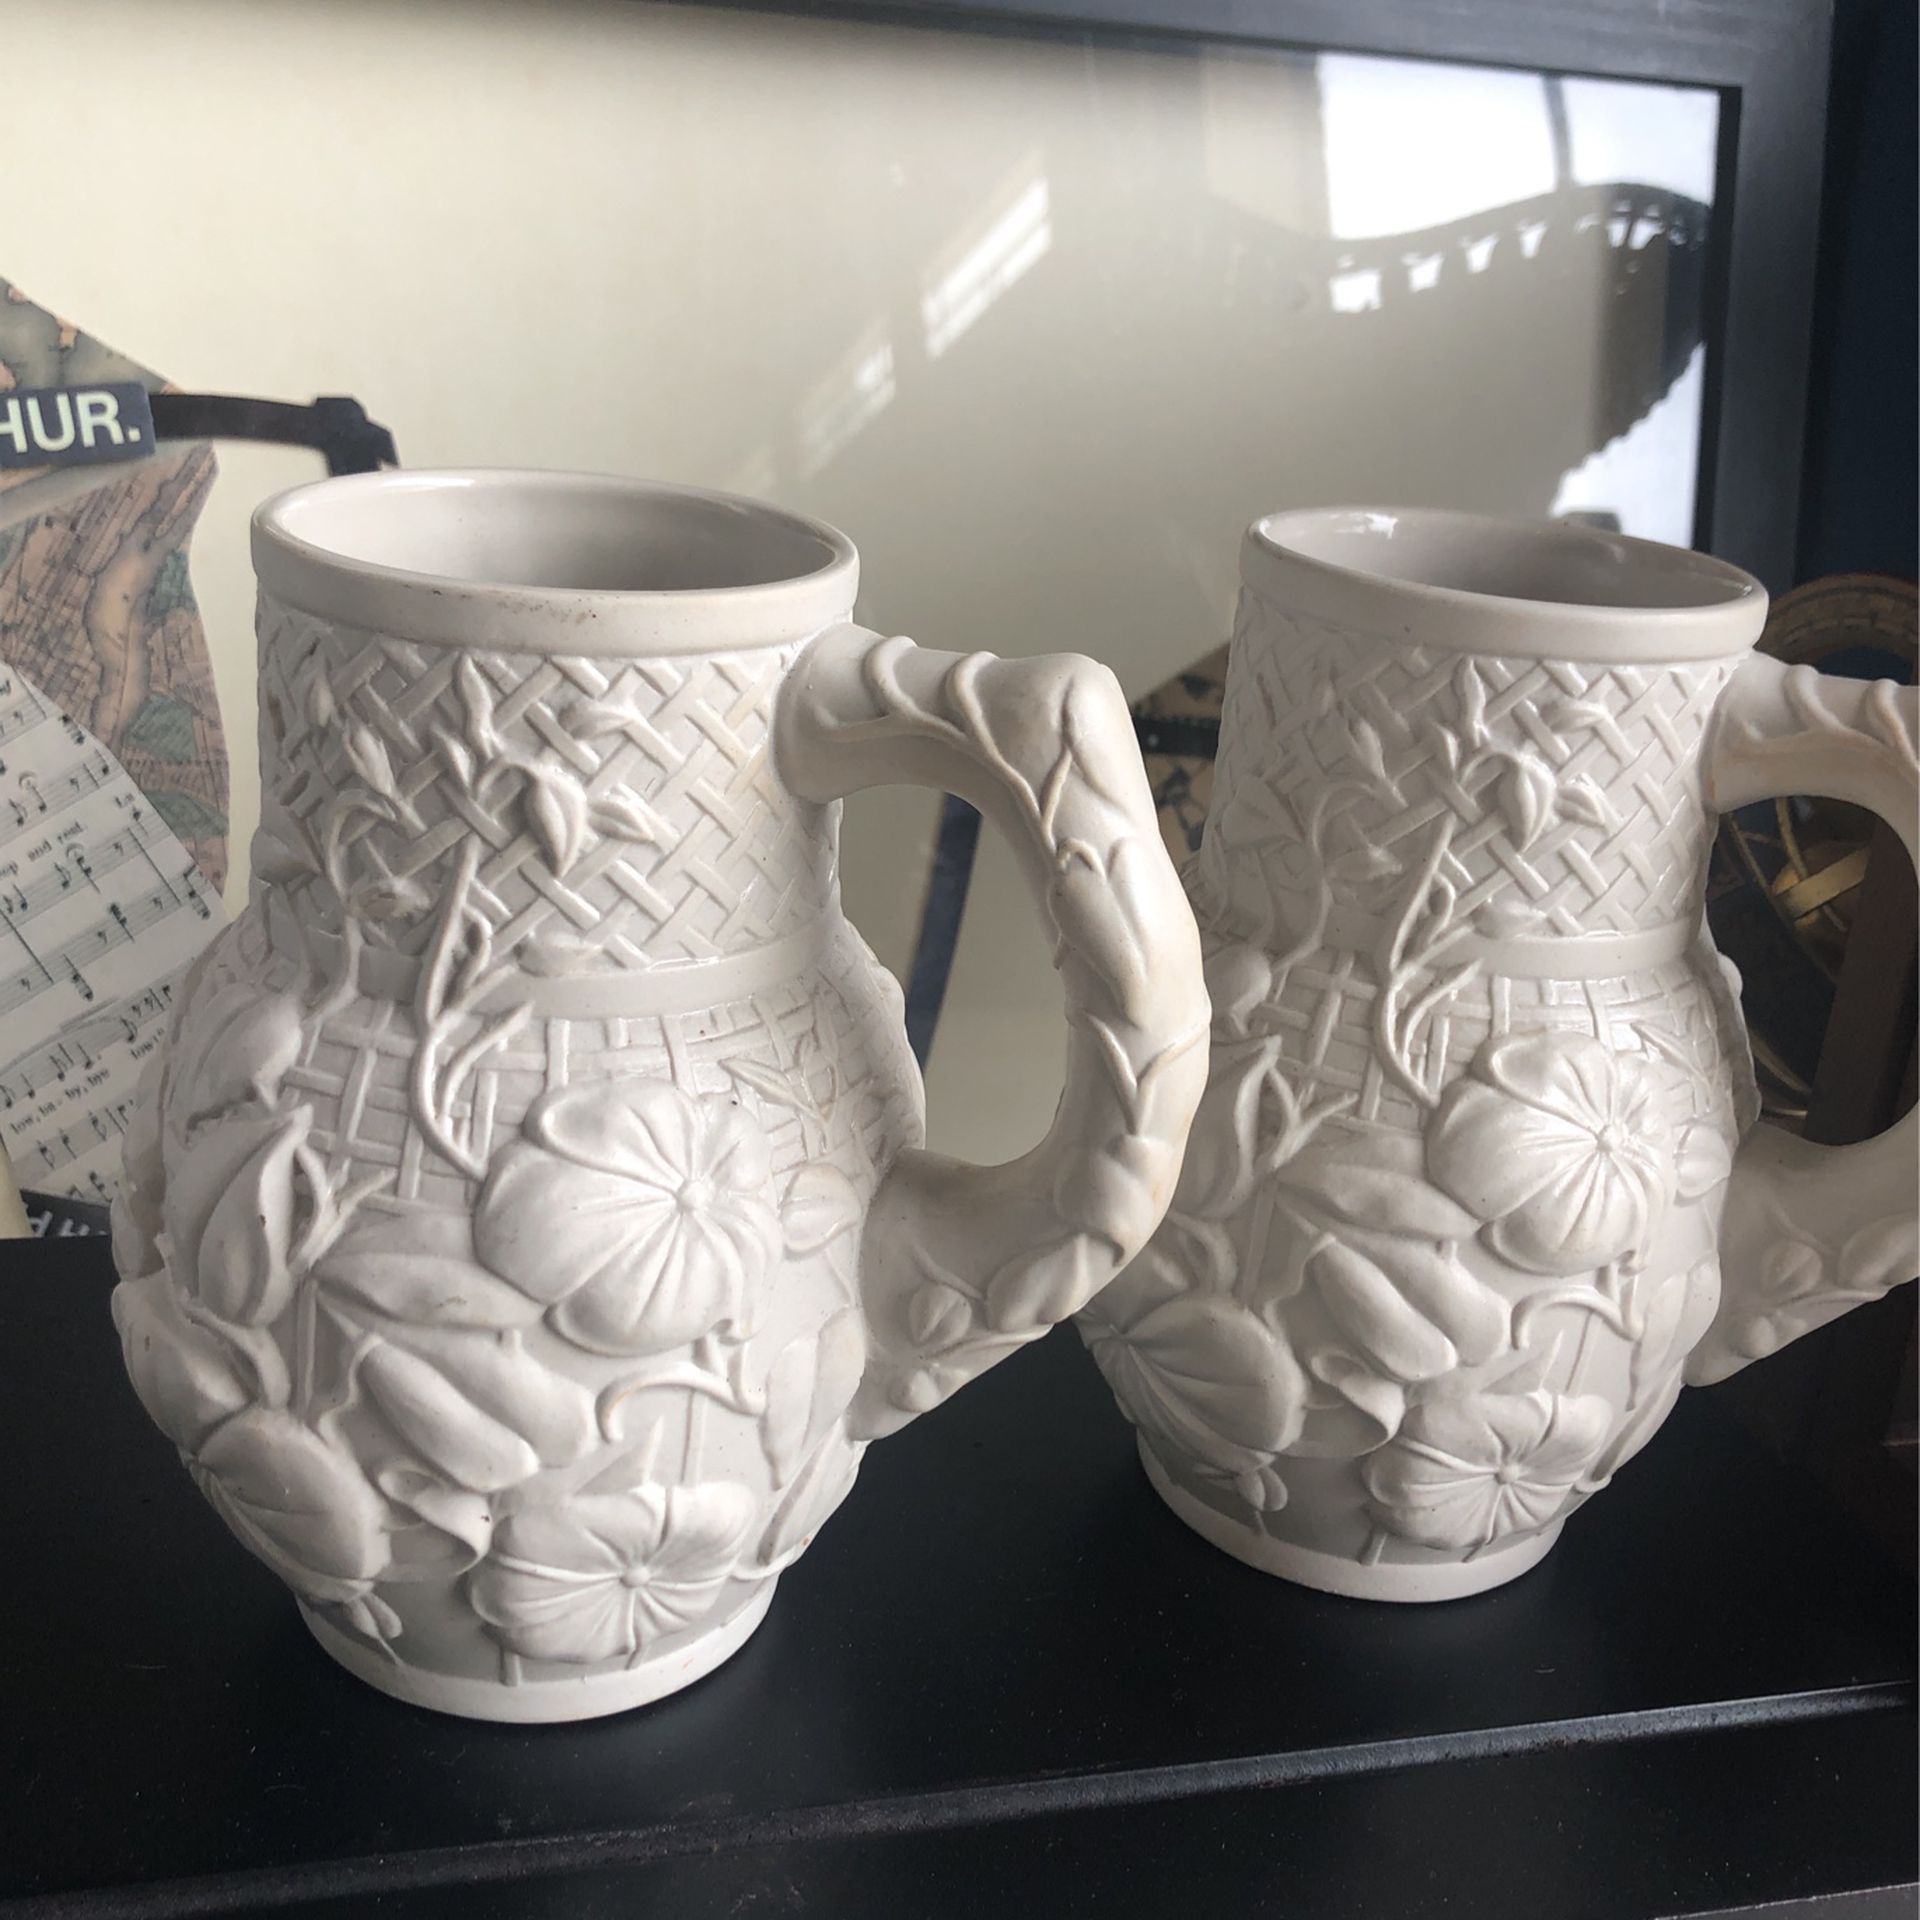  Very Nice Vase Cups 